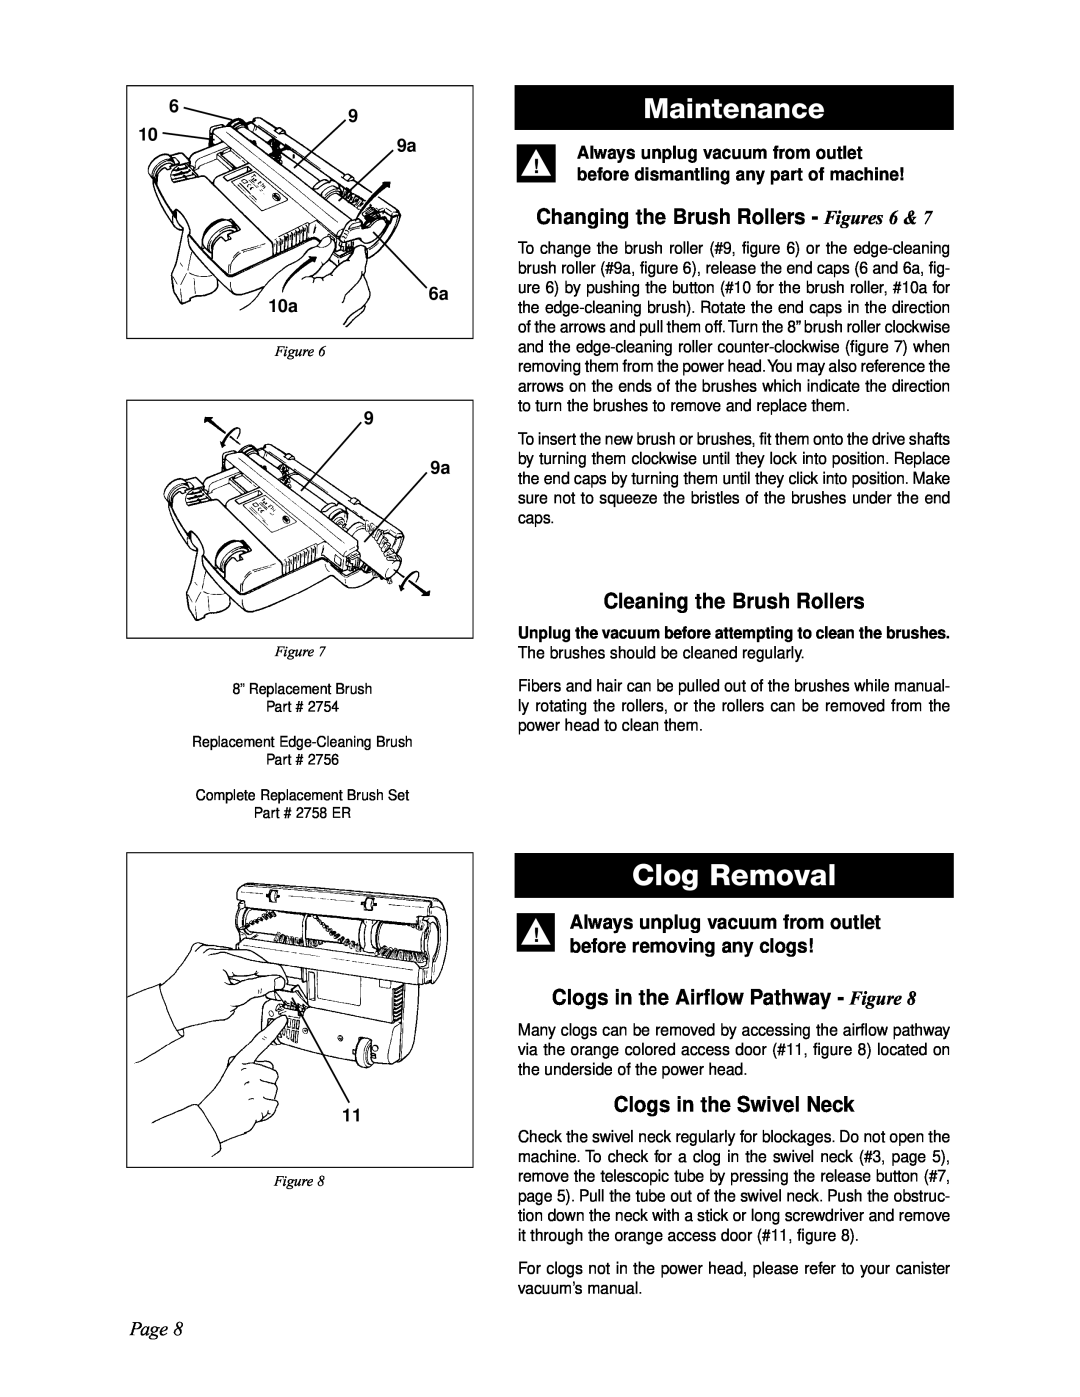 Sebo ET-H Maintenance, Changing the Brush Rollers - Figures 6, Cleaning the Brush Rollers, Clogs in the Swivel Neck, Page 